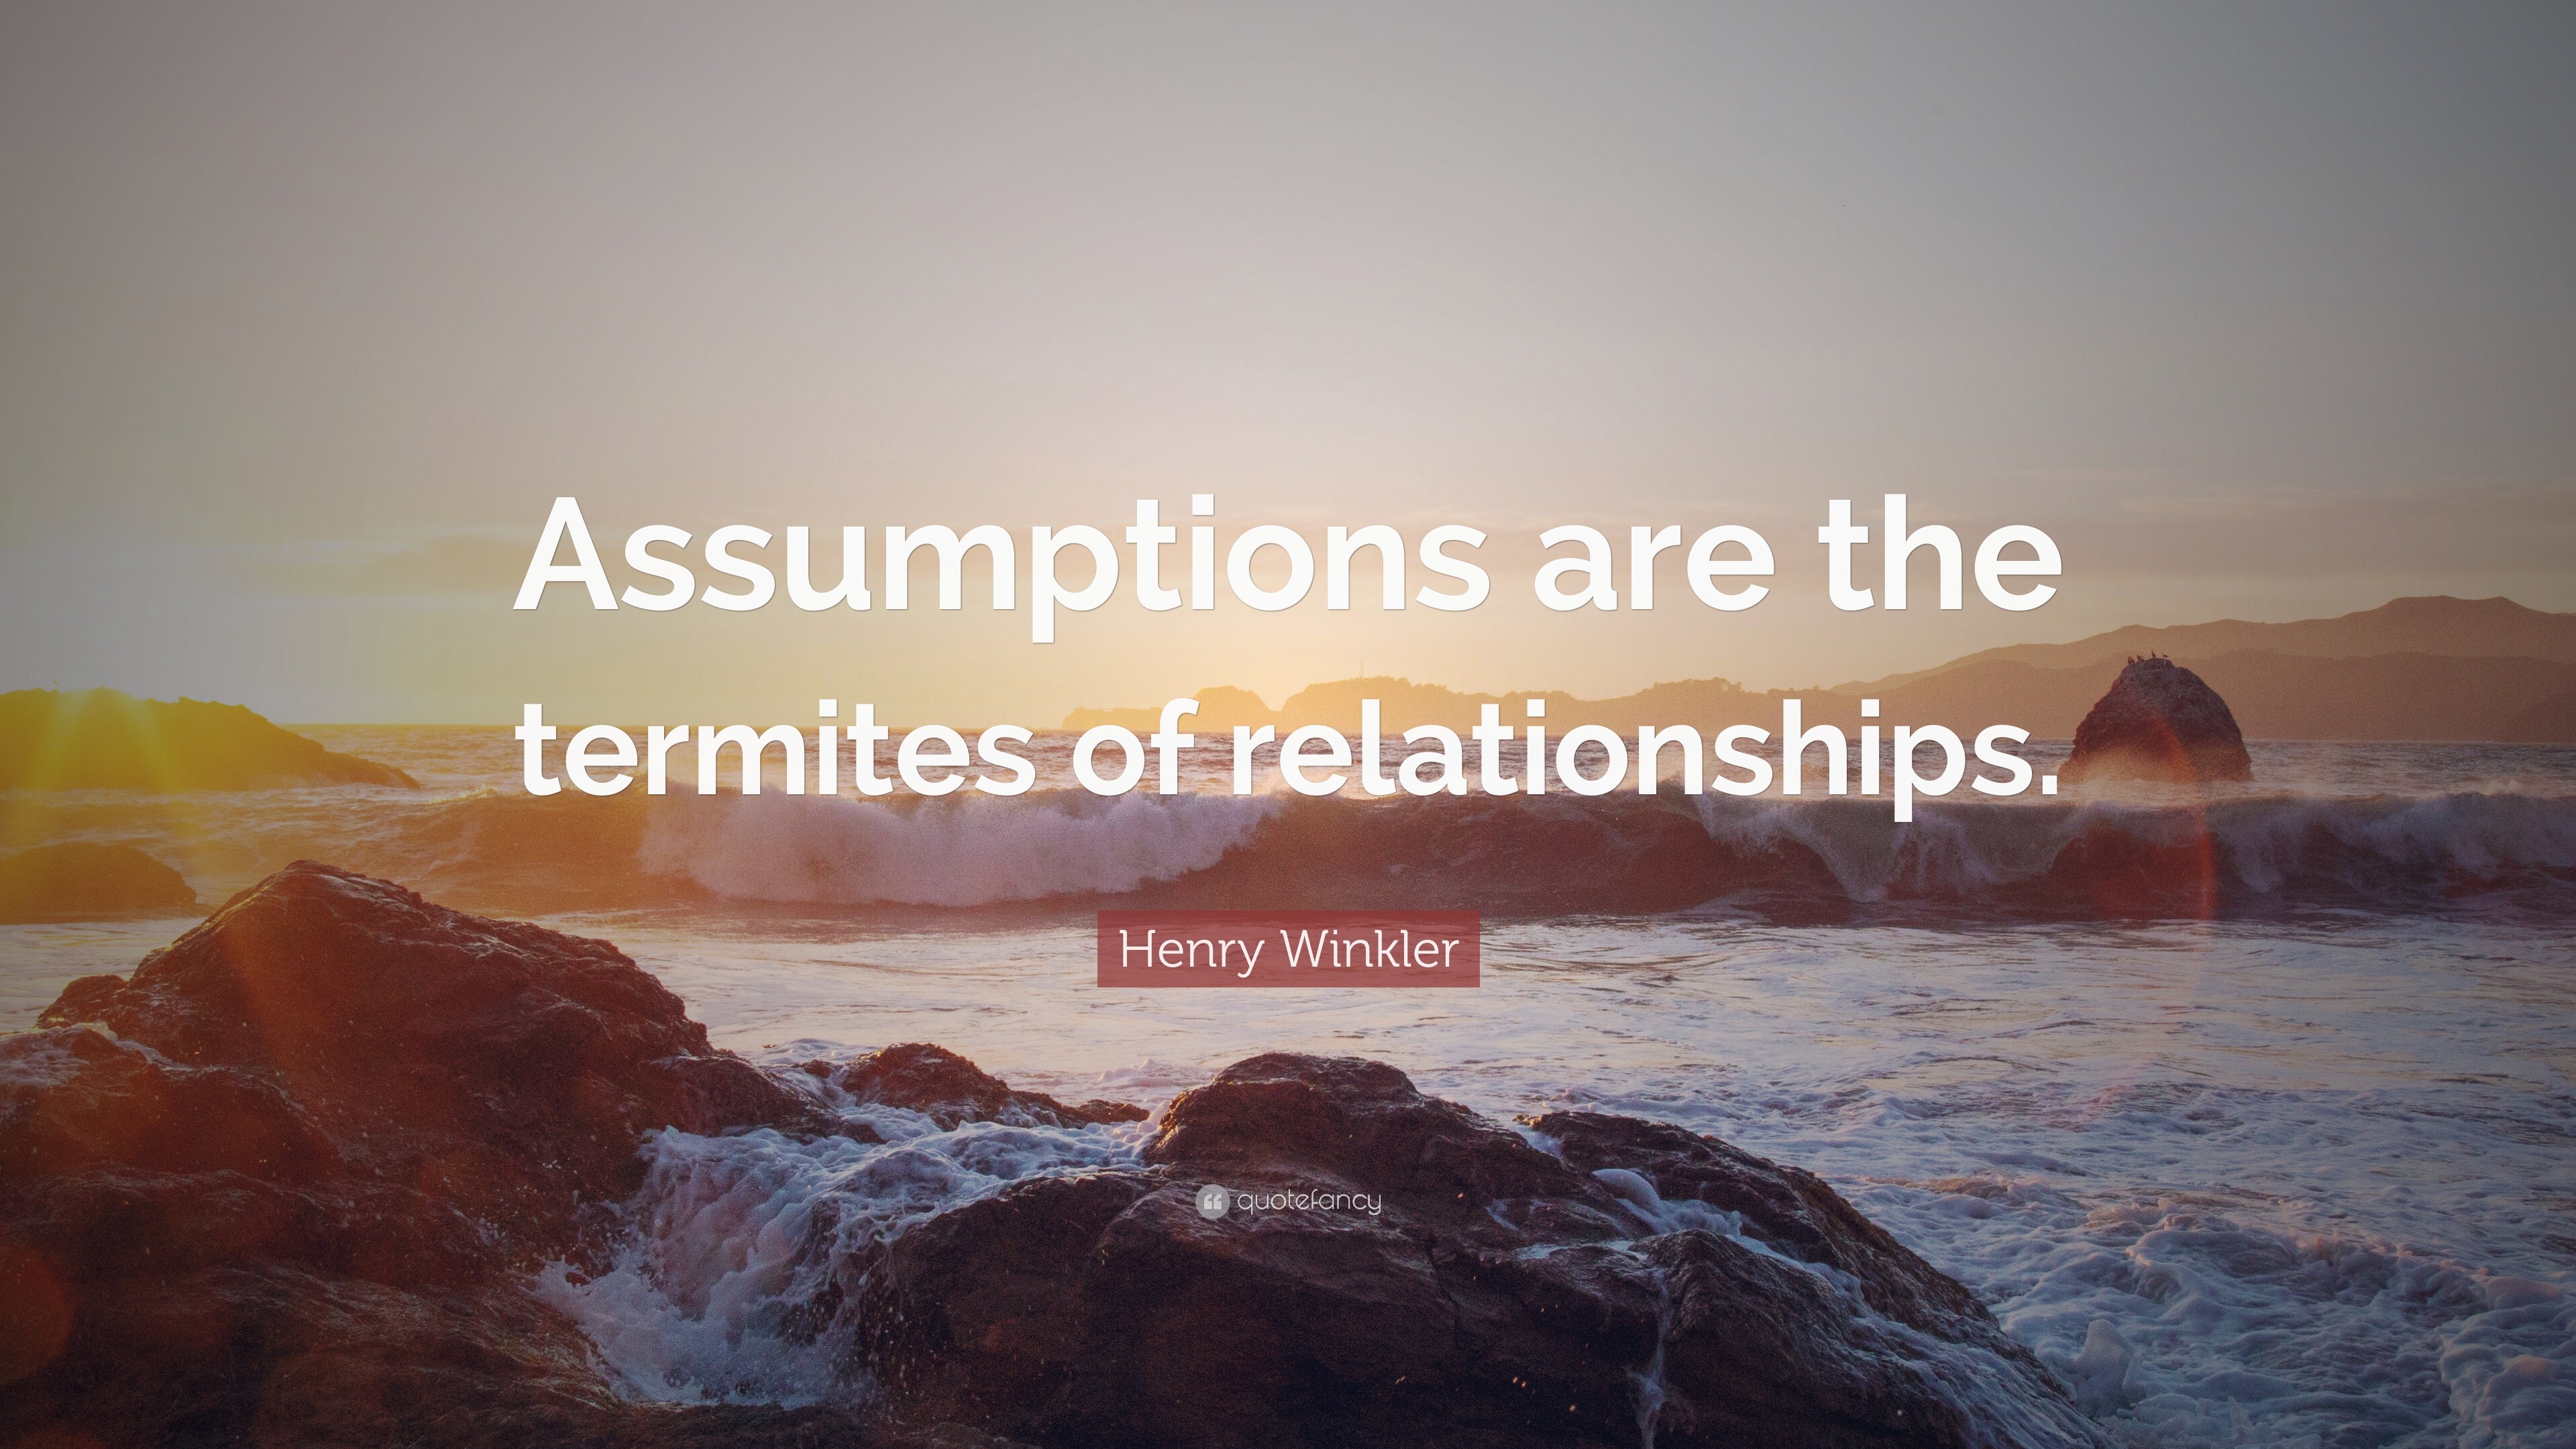 assumption quotes relationships